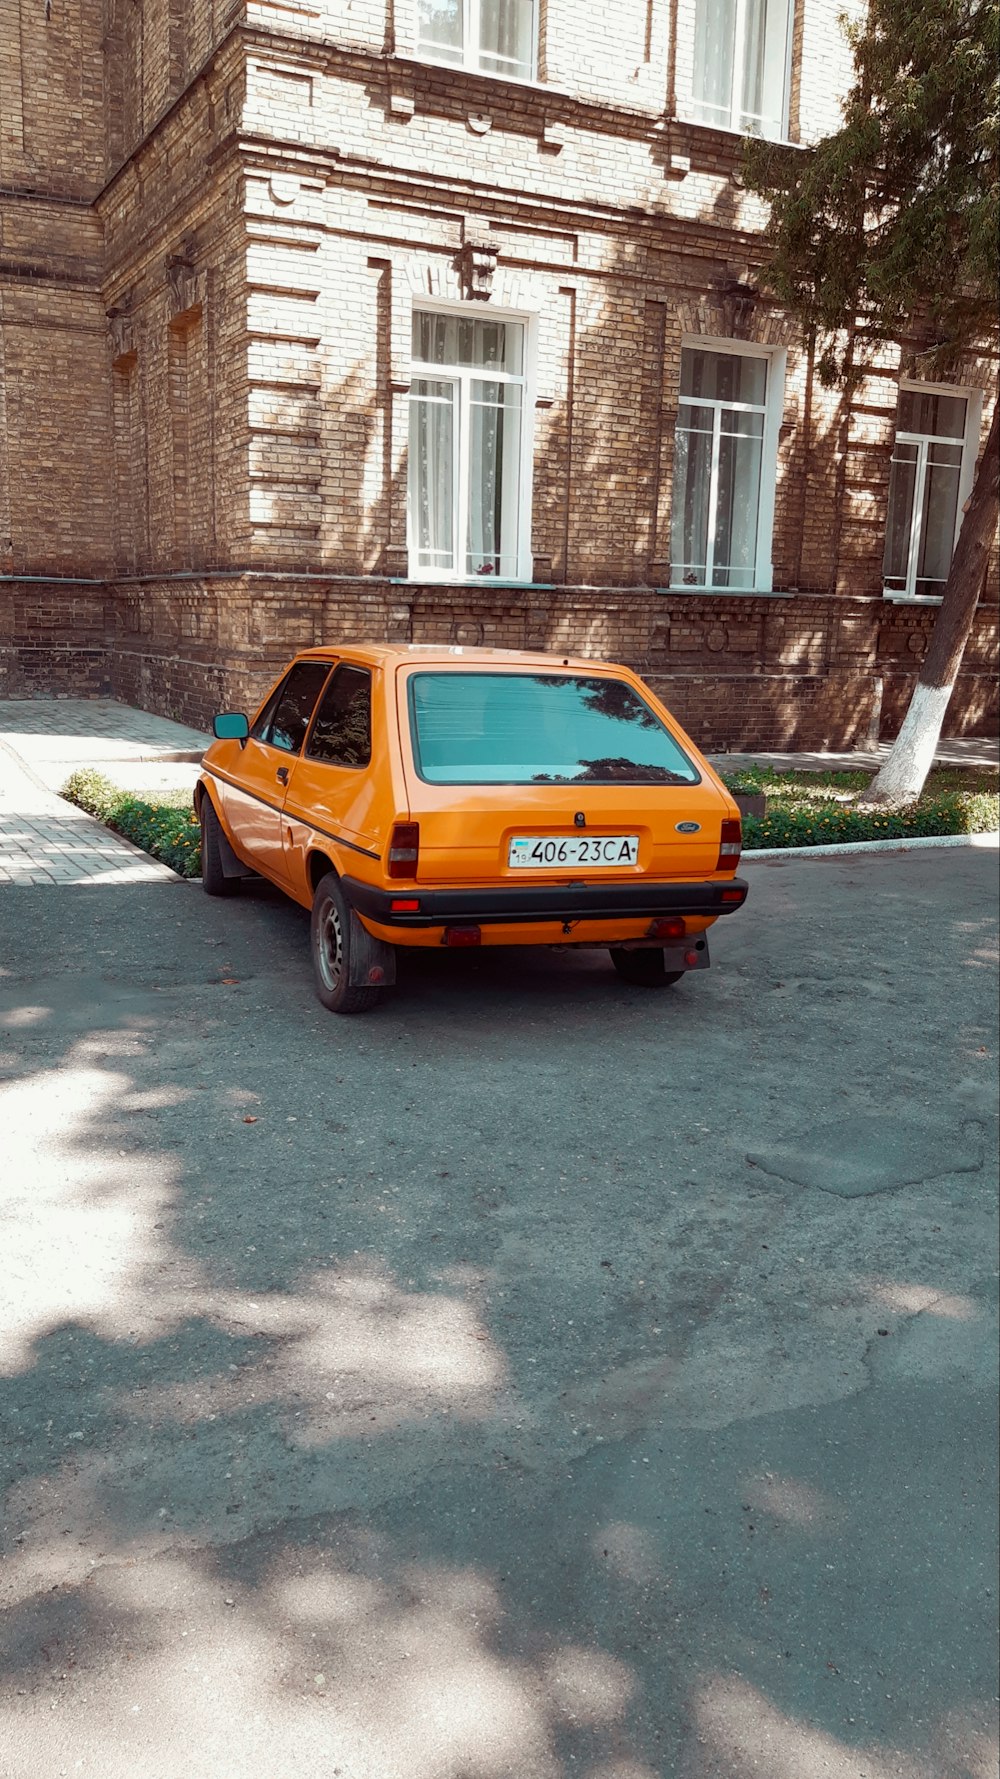 orange 5 door hatchback parked beside brown brick building